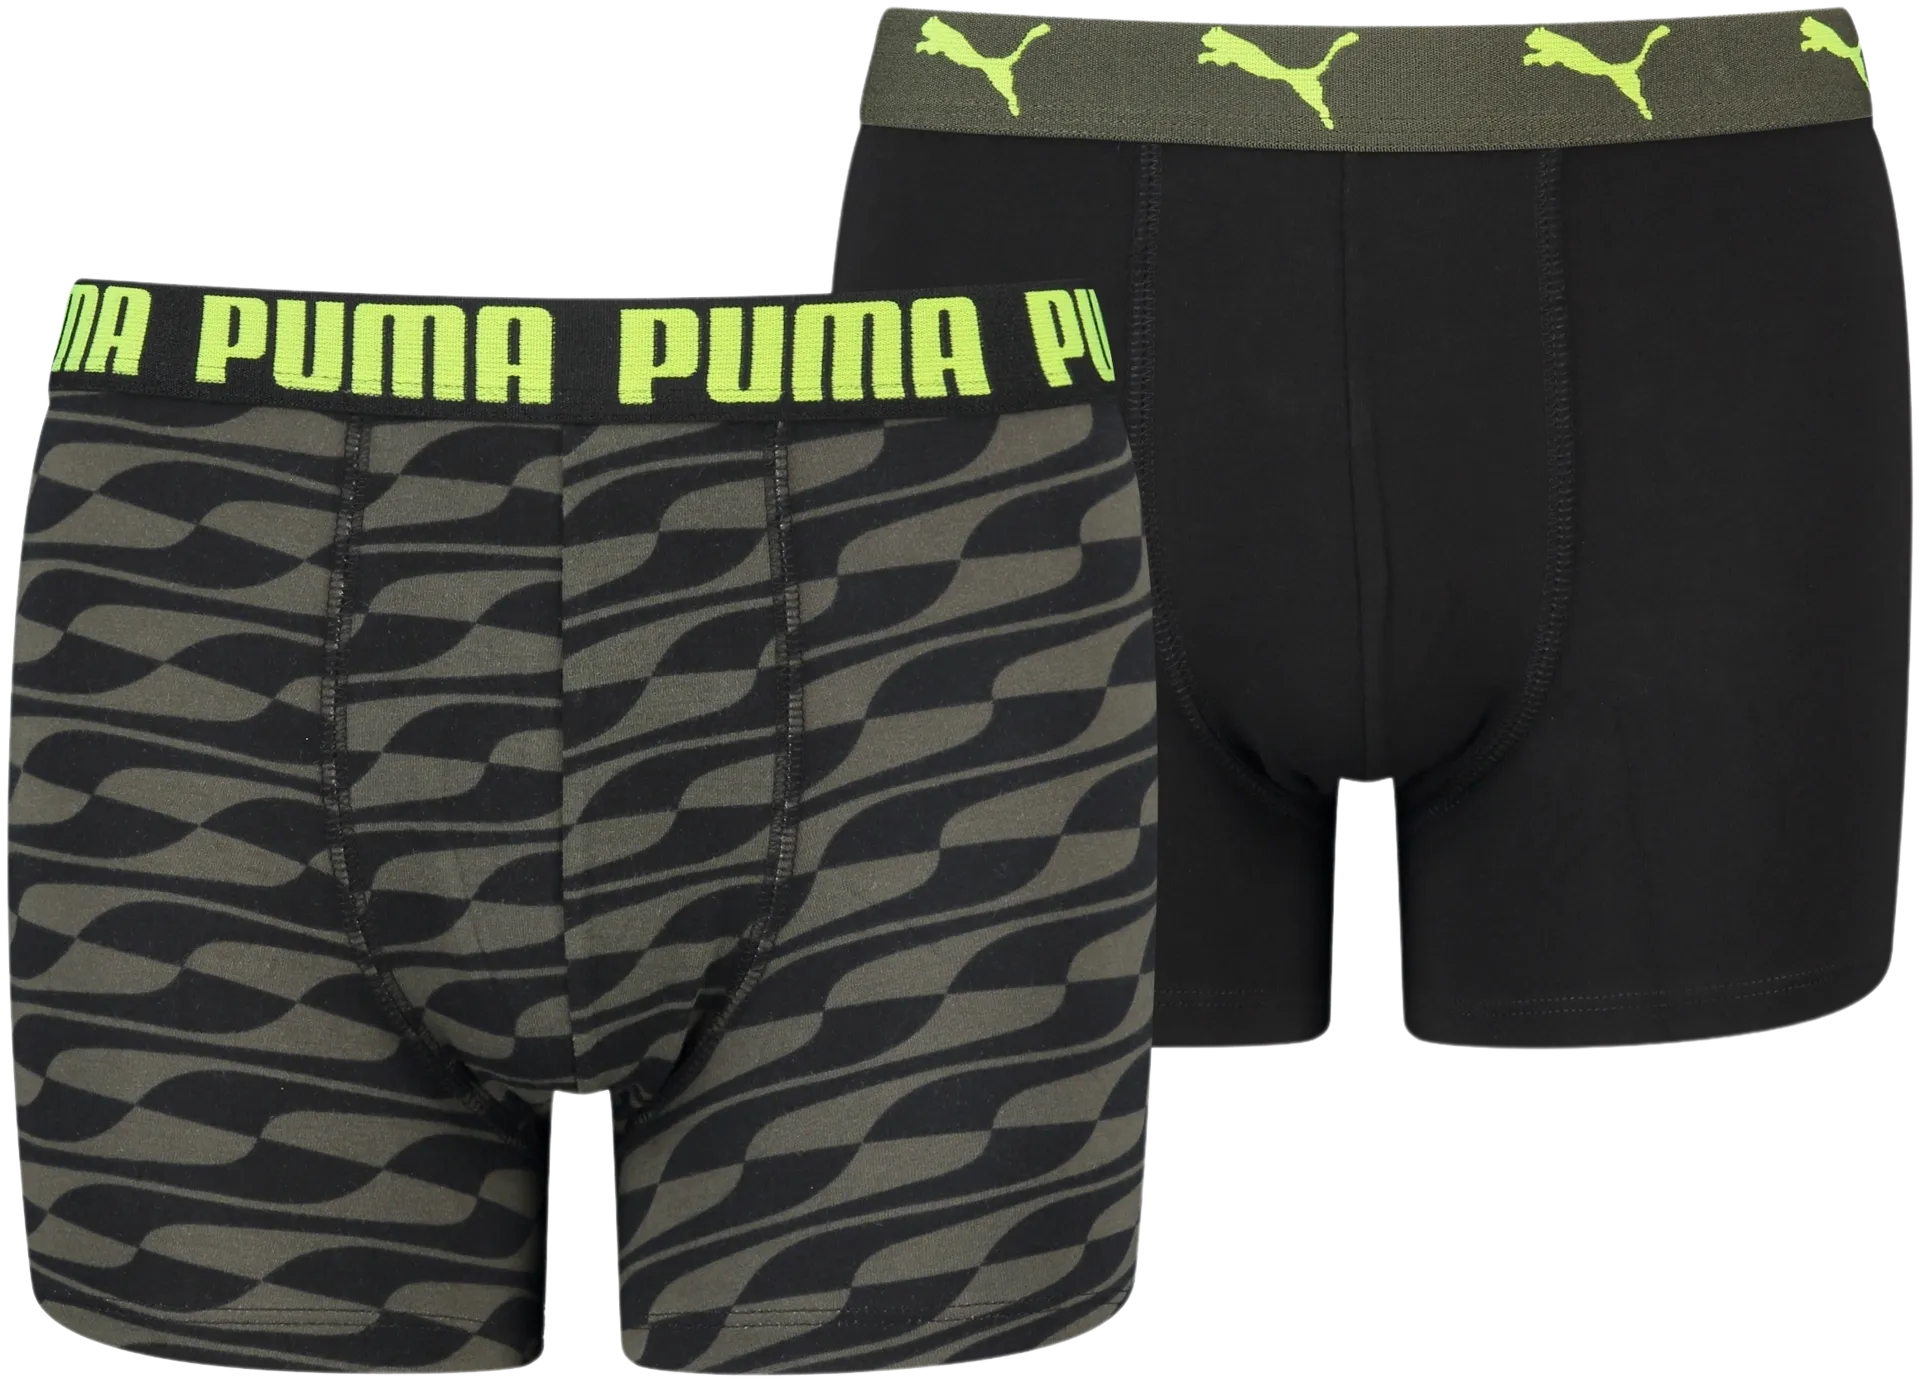 Puma poikien formprint boxerit 2-pack - 003 BLACK - 1